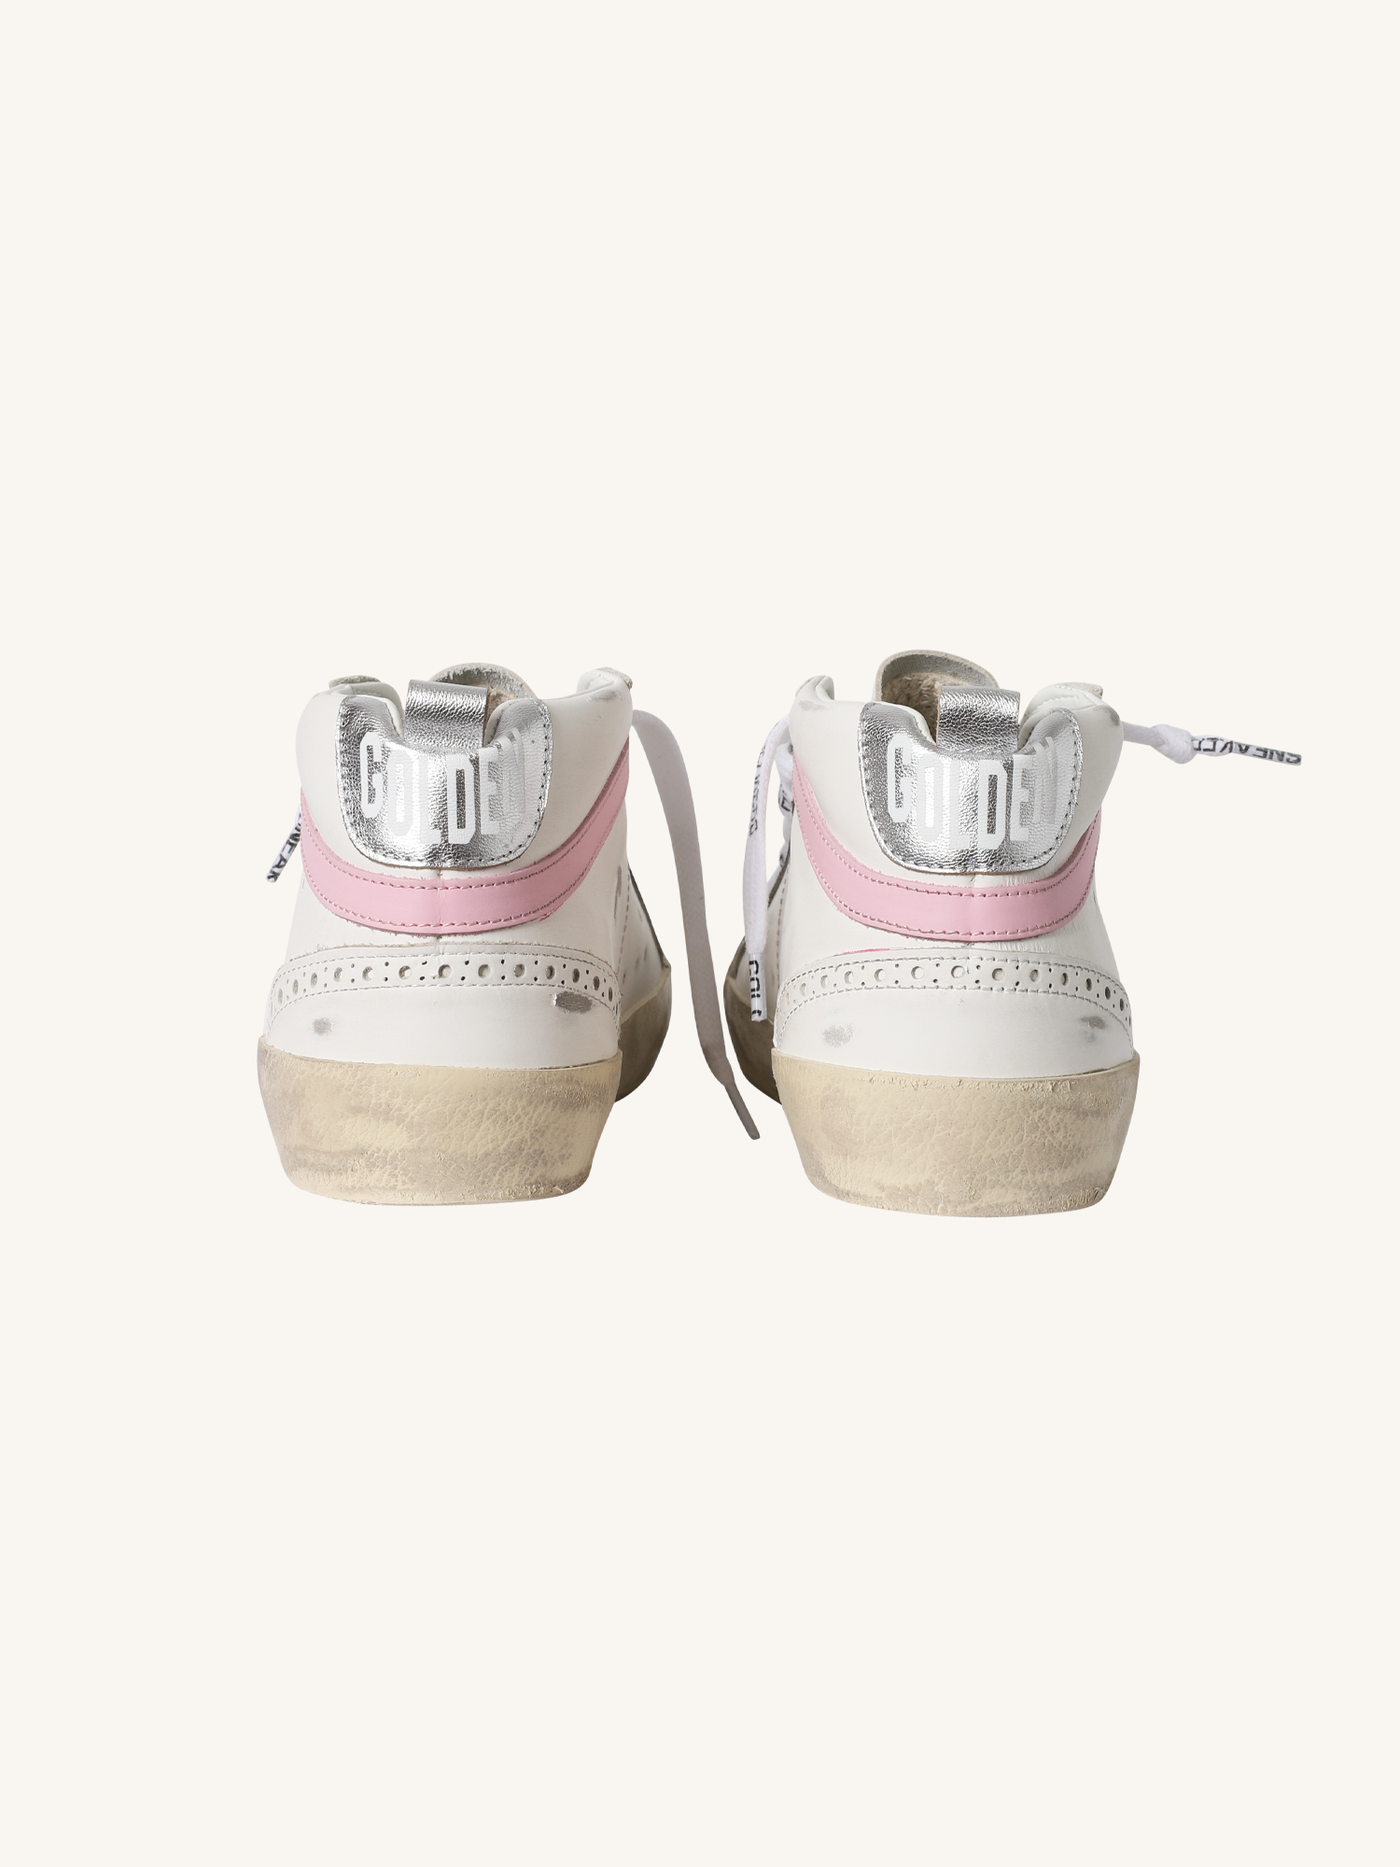 Mid Star Sneaker in Pink & Silver